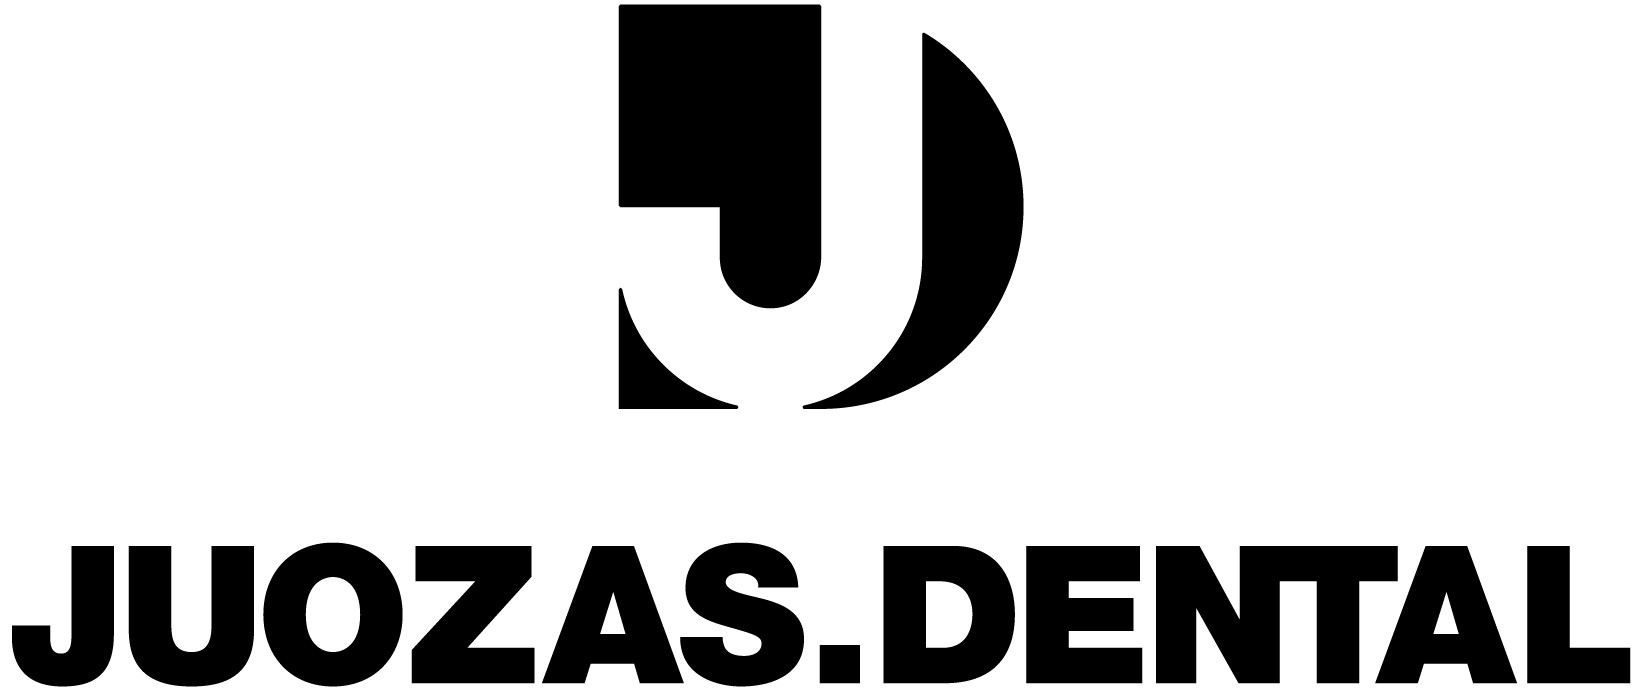 Juozas Dental odontologijos klinikos logotipas